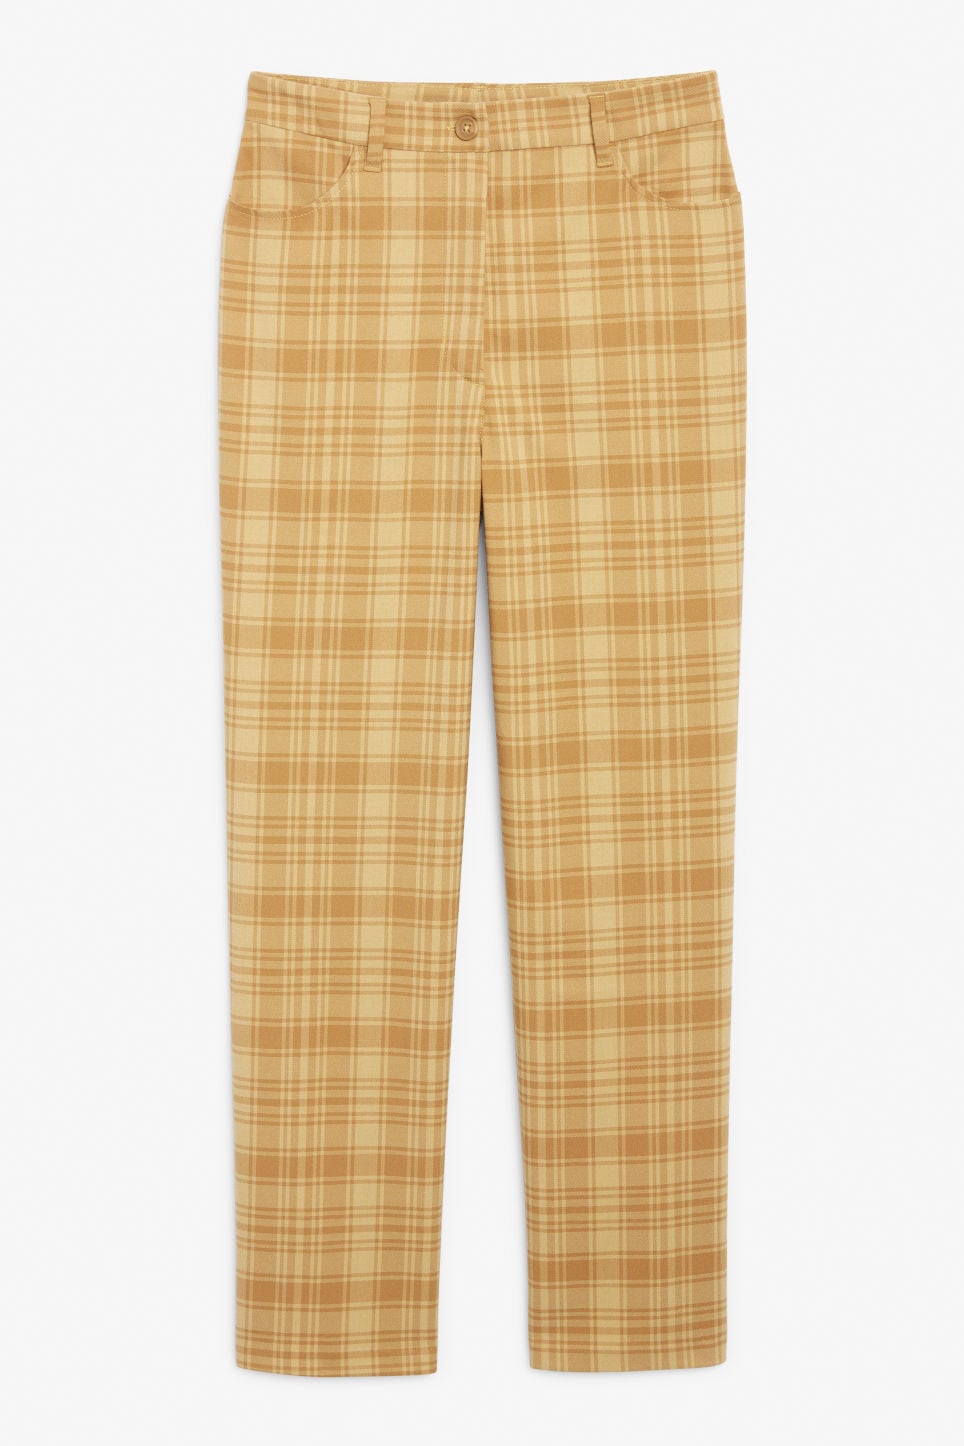 Monki Straight Leg Trousers ($35)